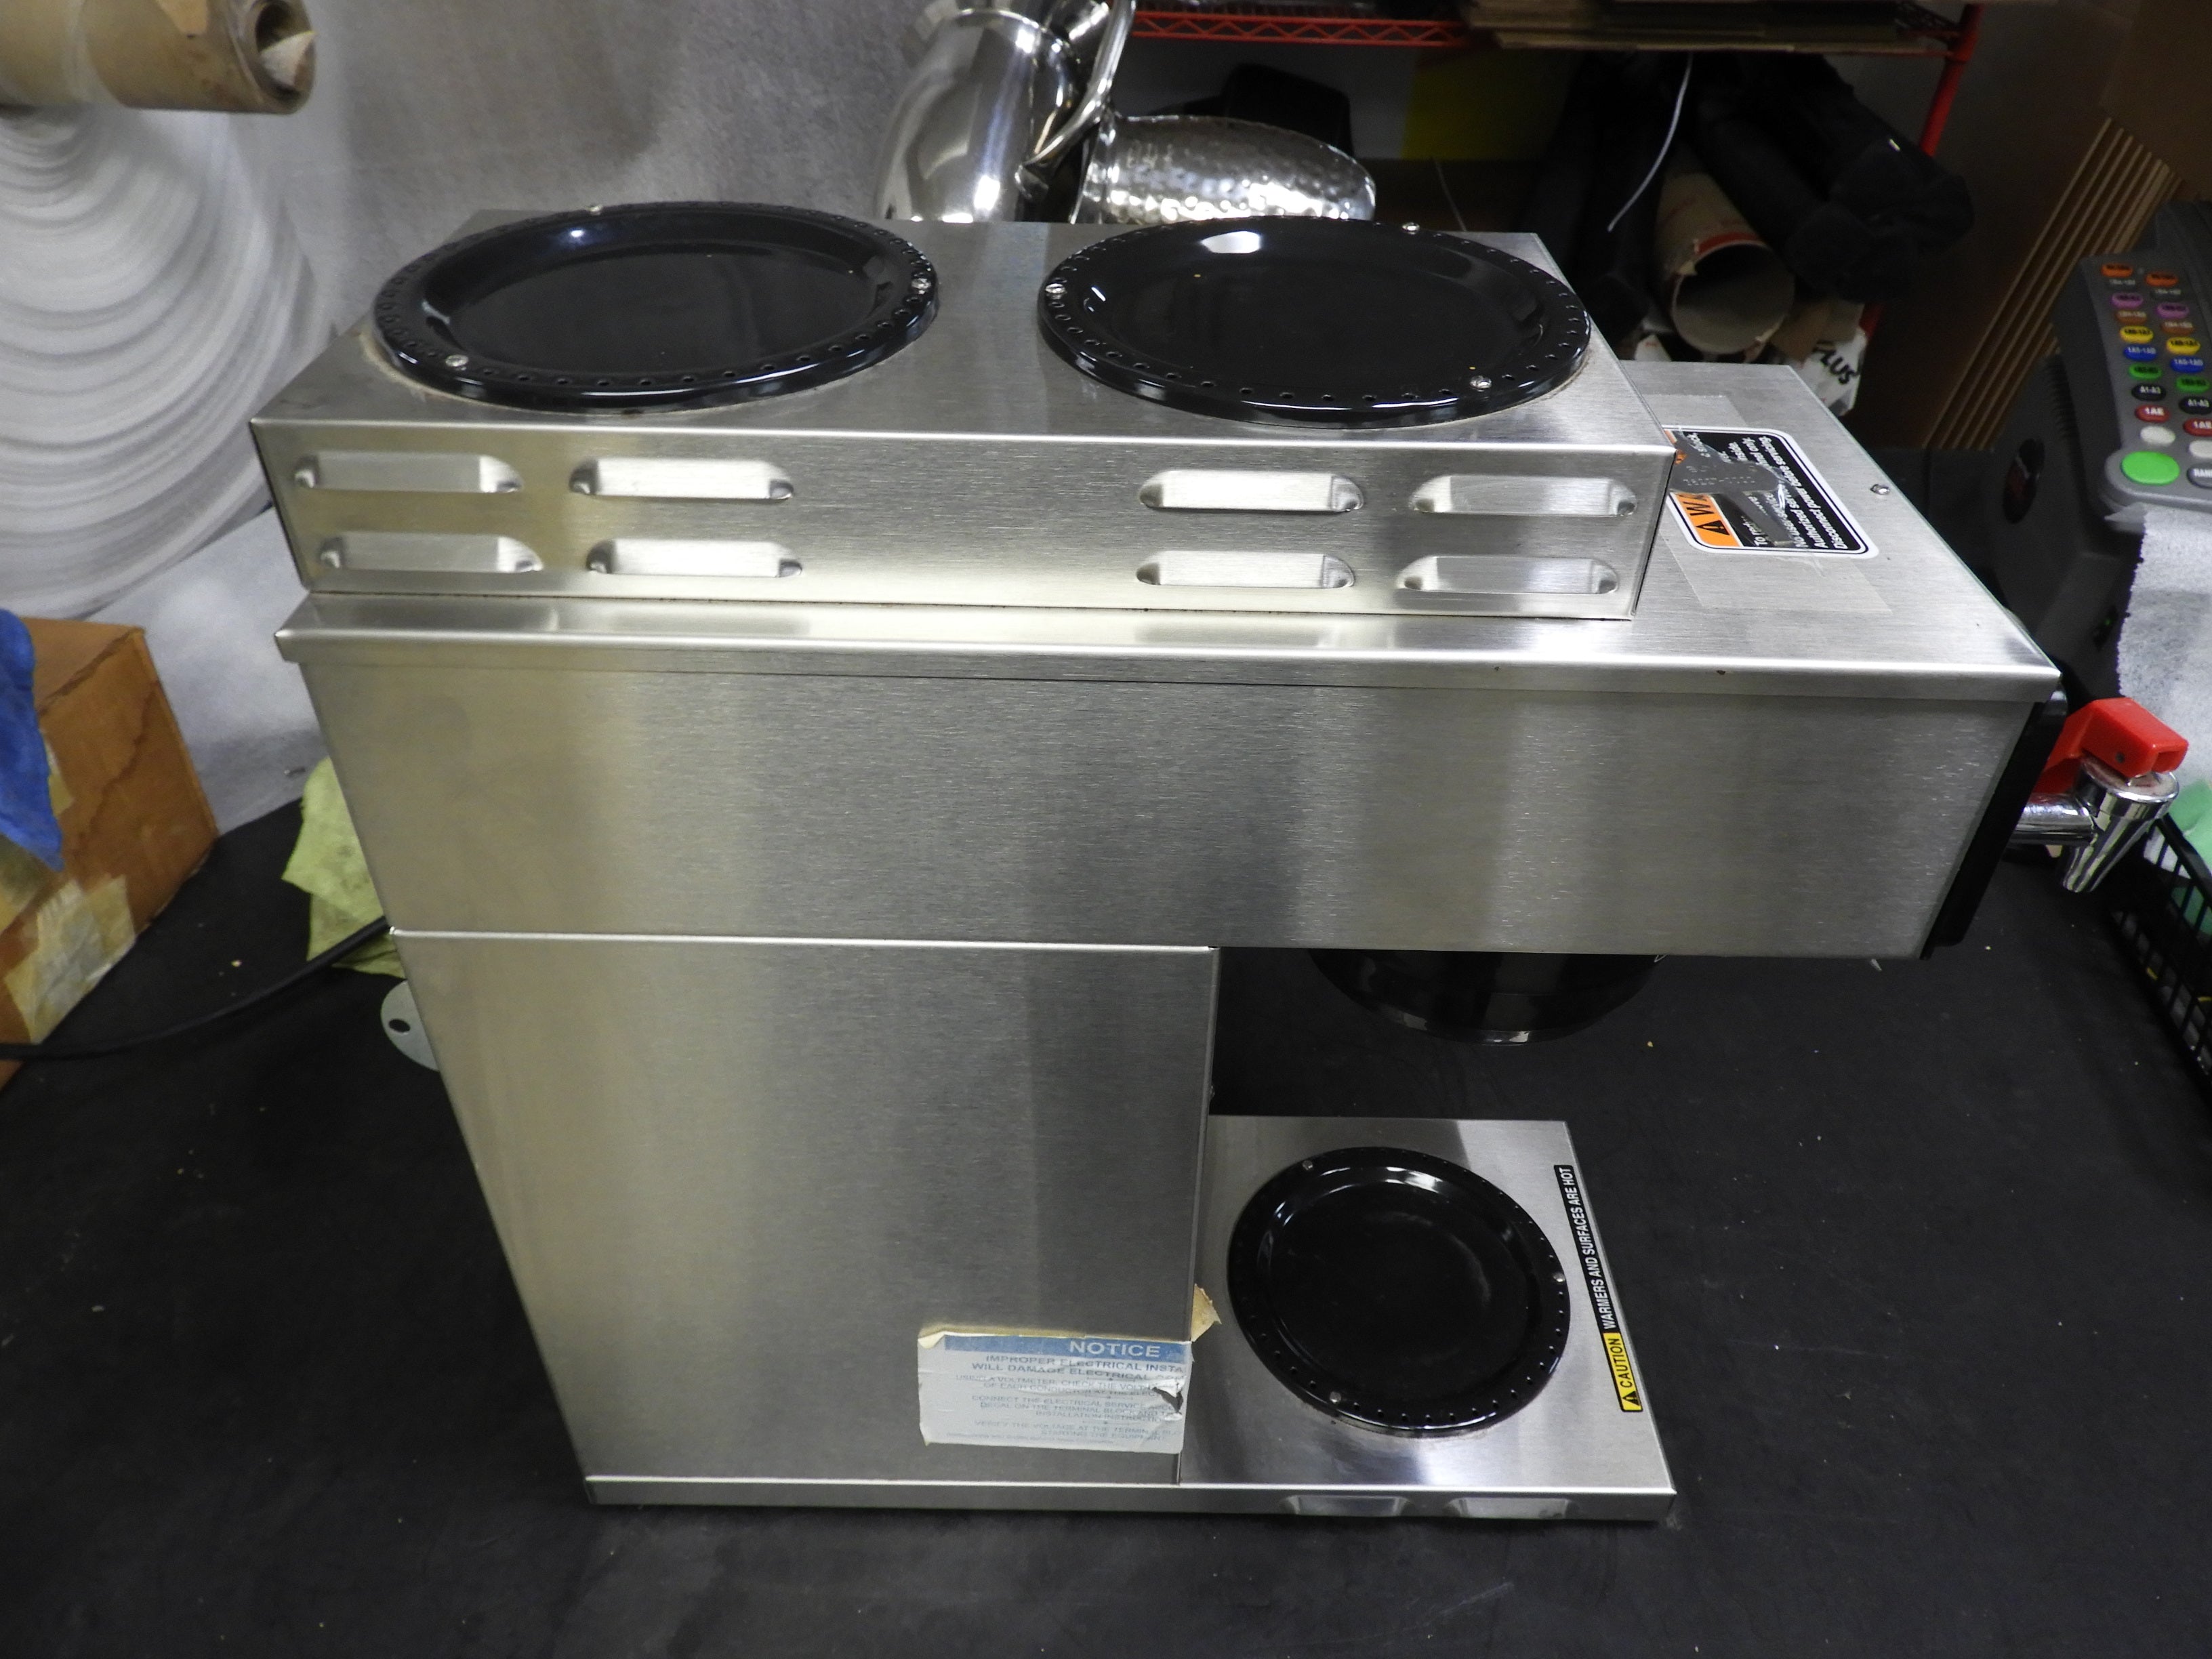 Bunn 38700.0008 Axiom-DV-3 Dual Voltage Coffee Brewer (120V Standard)